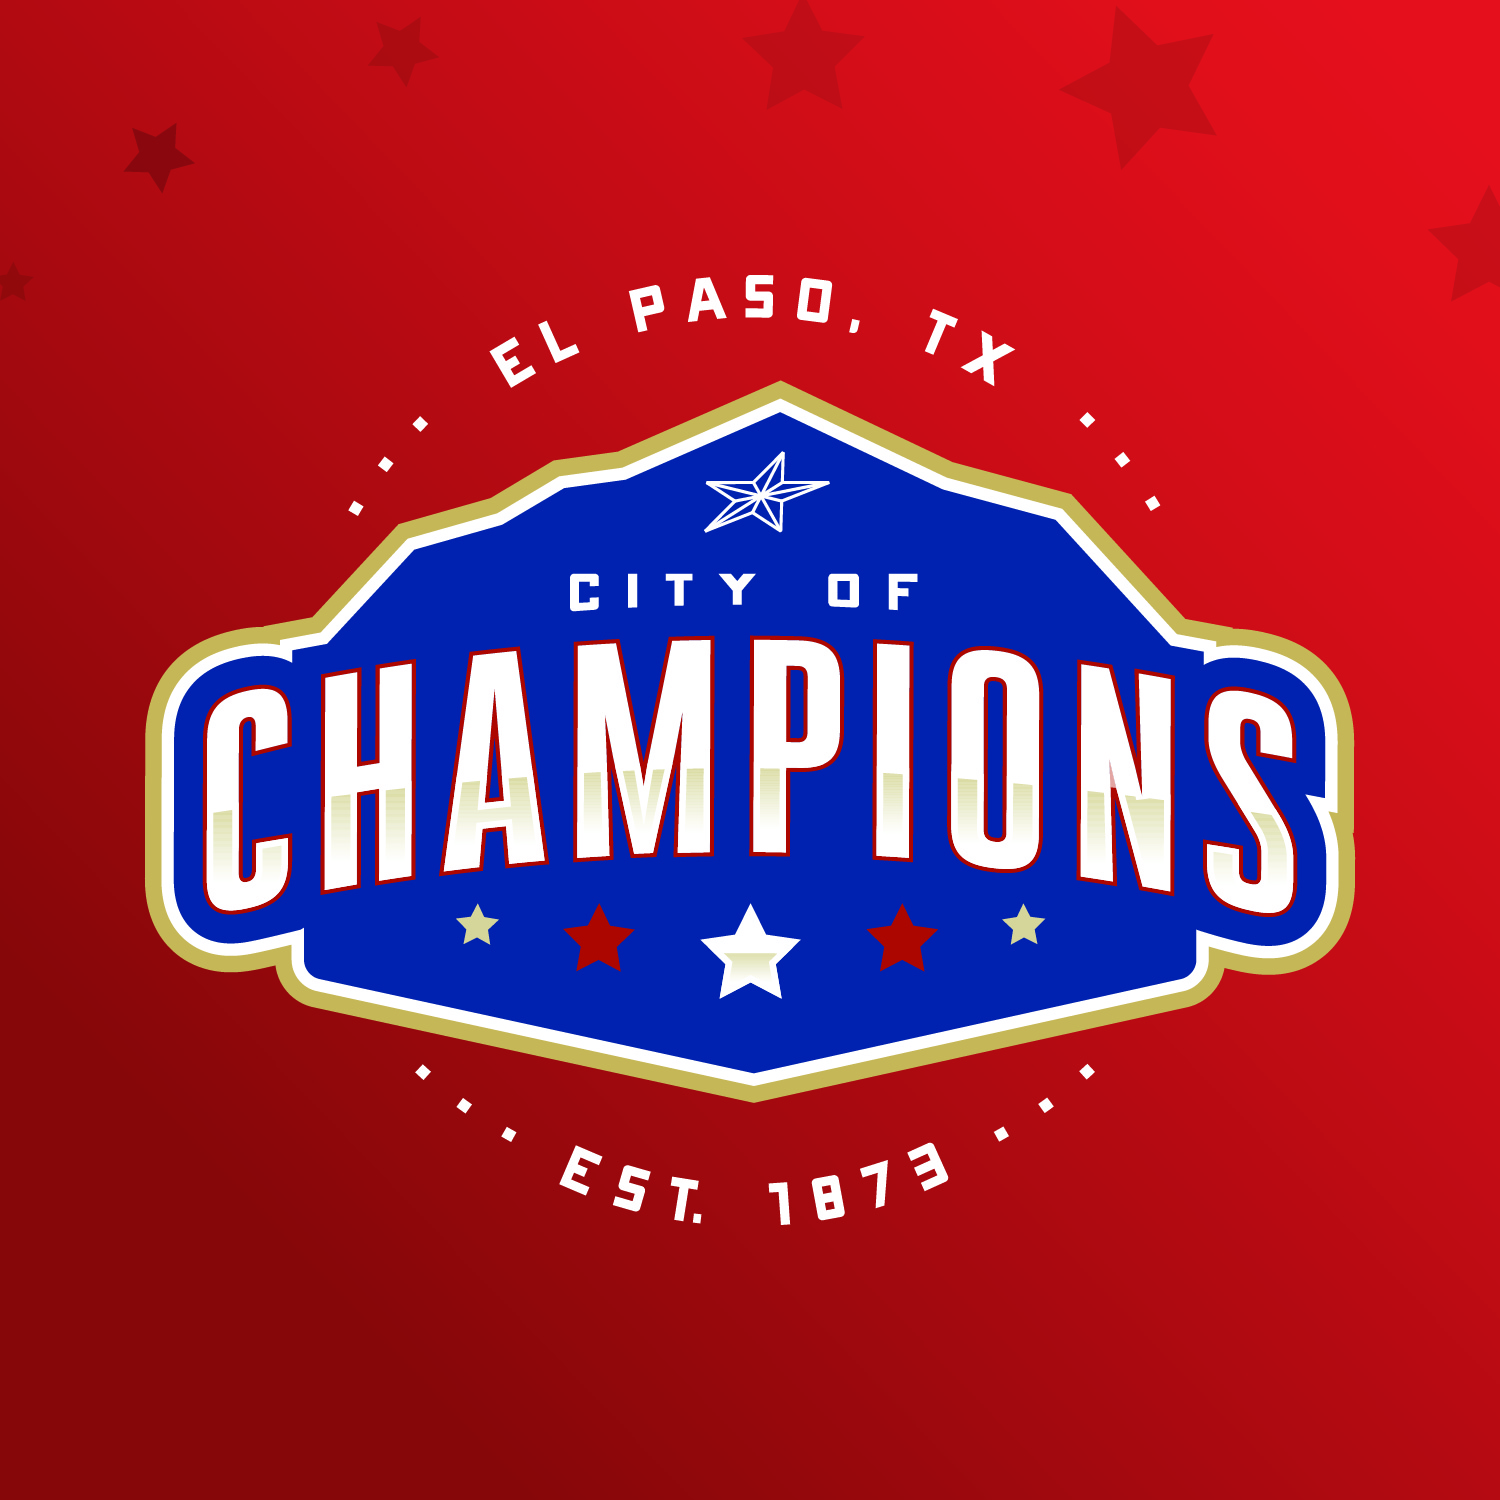 City of Champions – All America City Award 2018